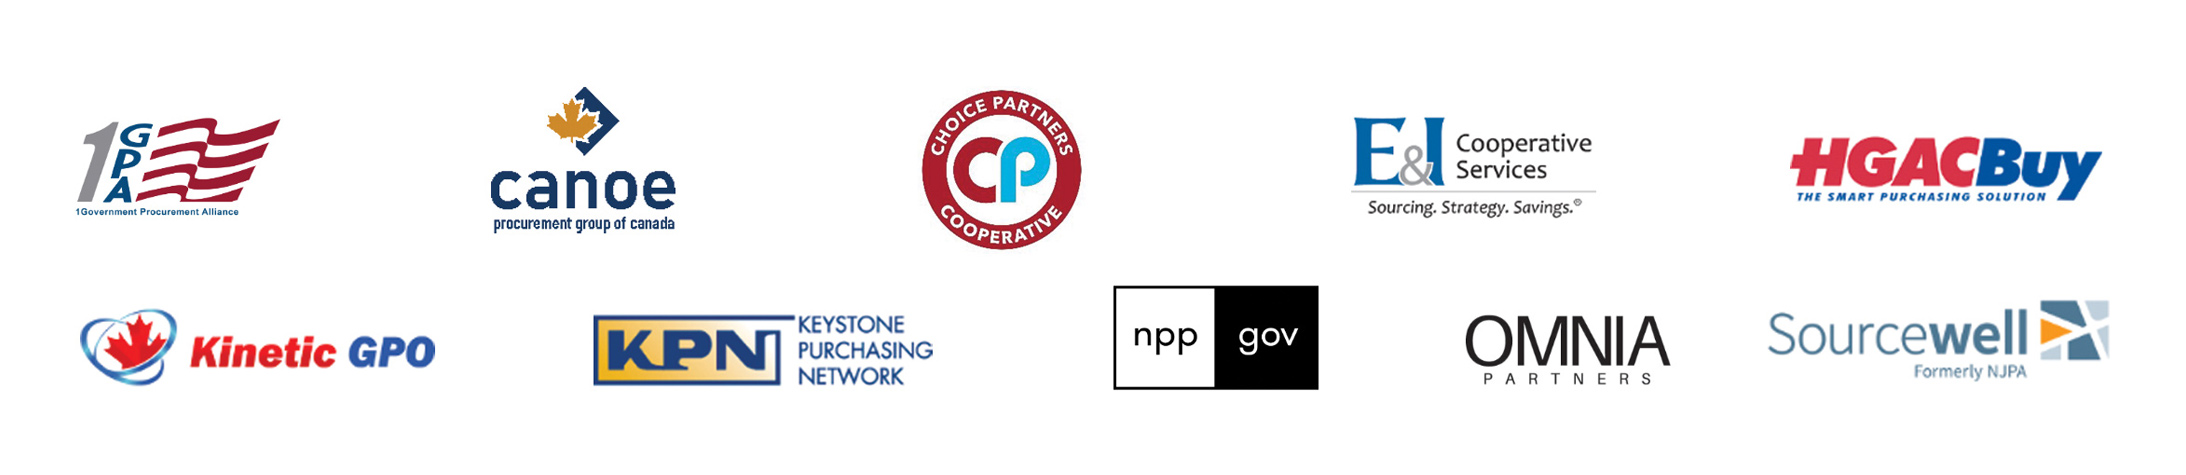 NCPP Partner's logos